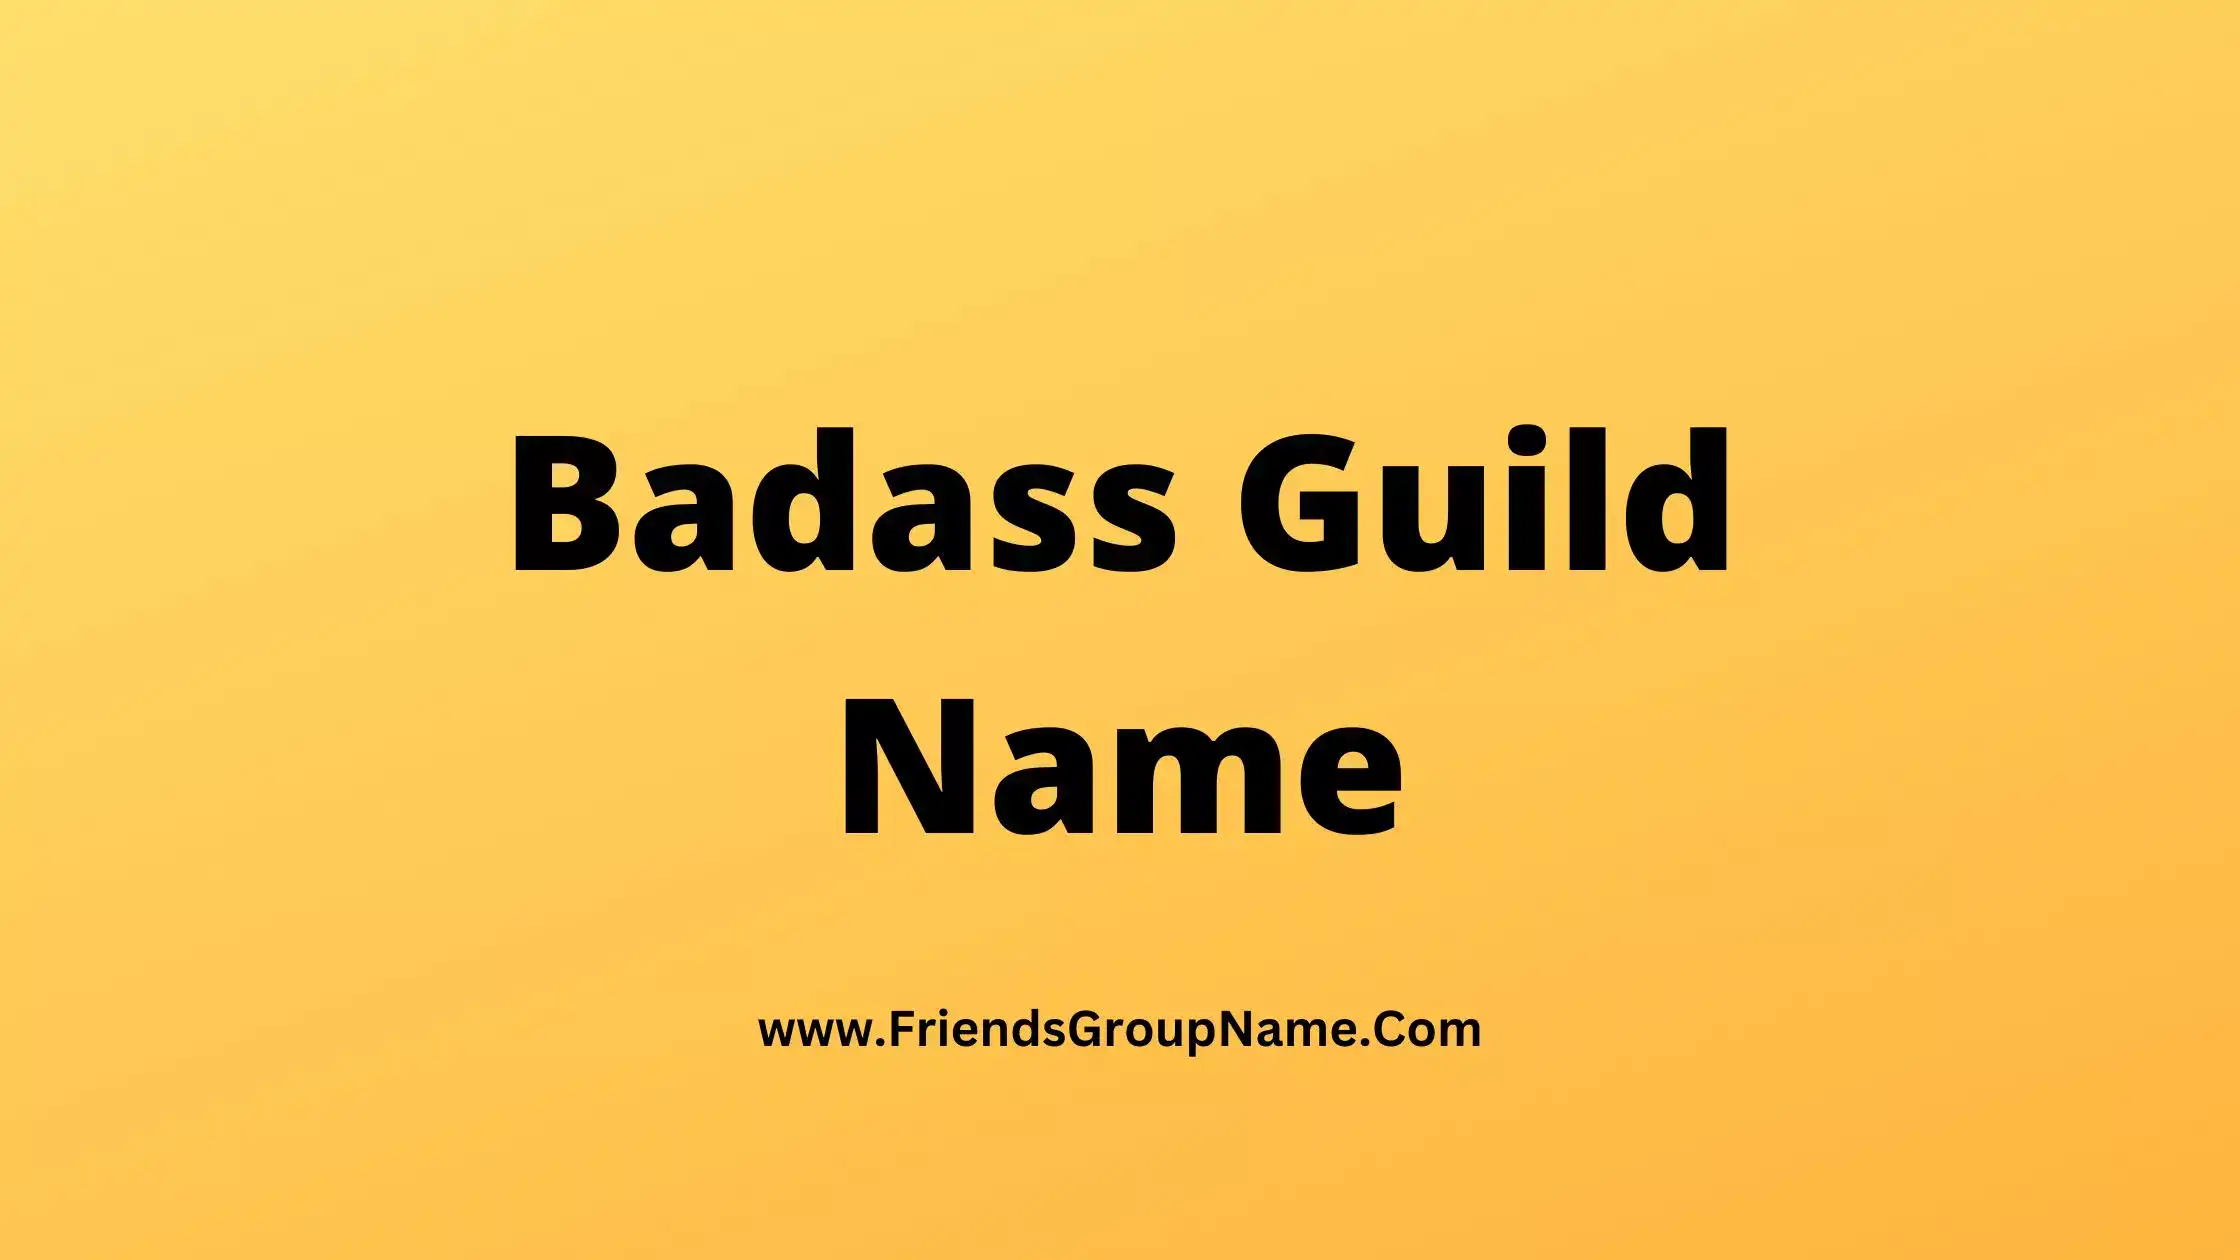 Badass Guild Name